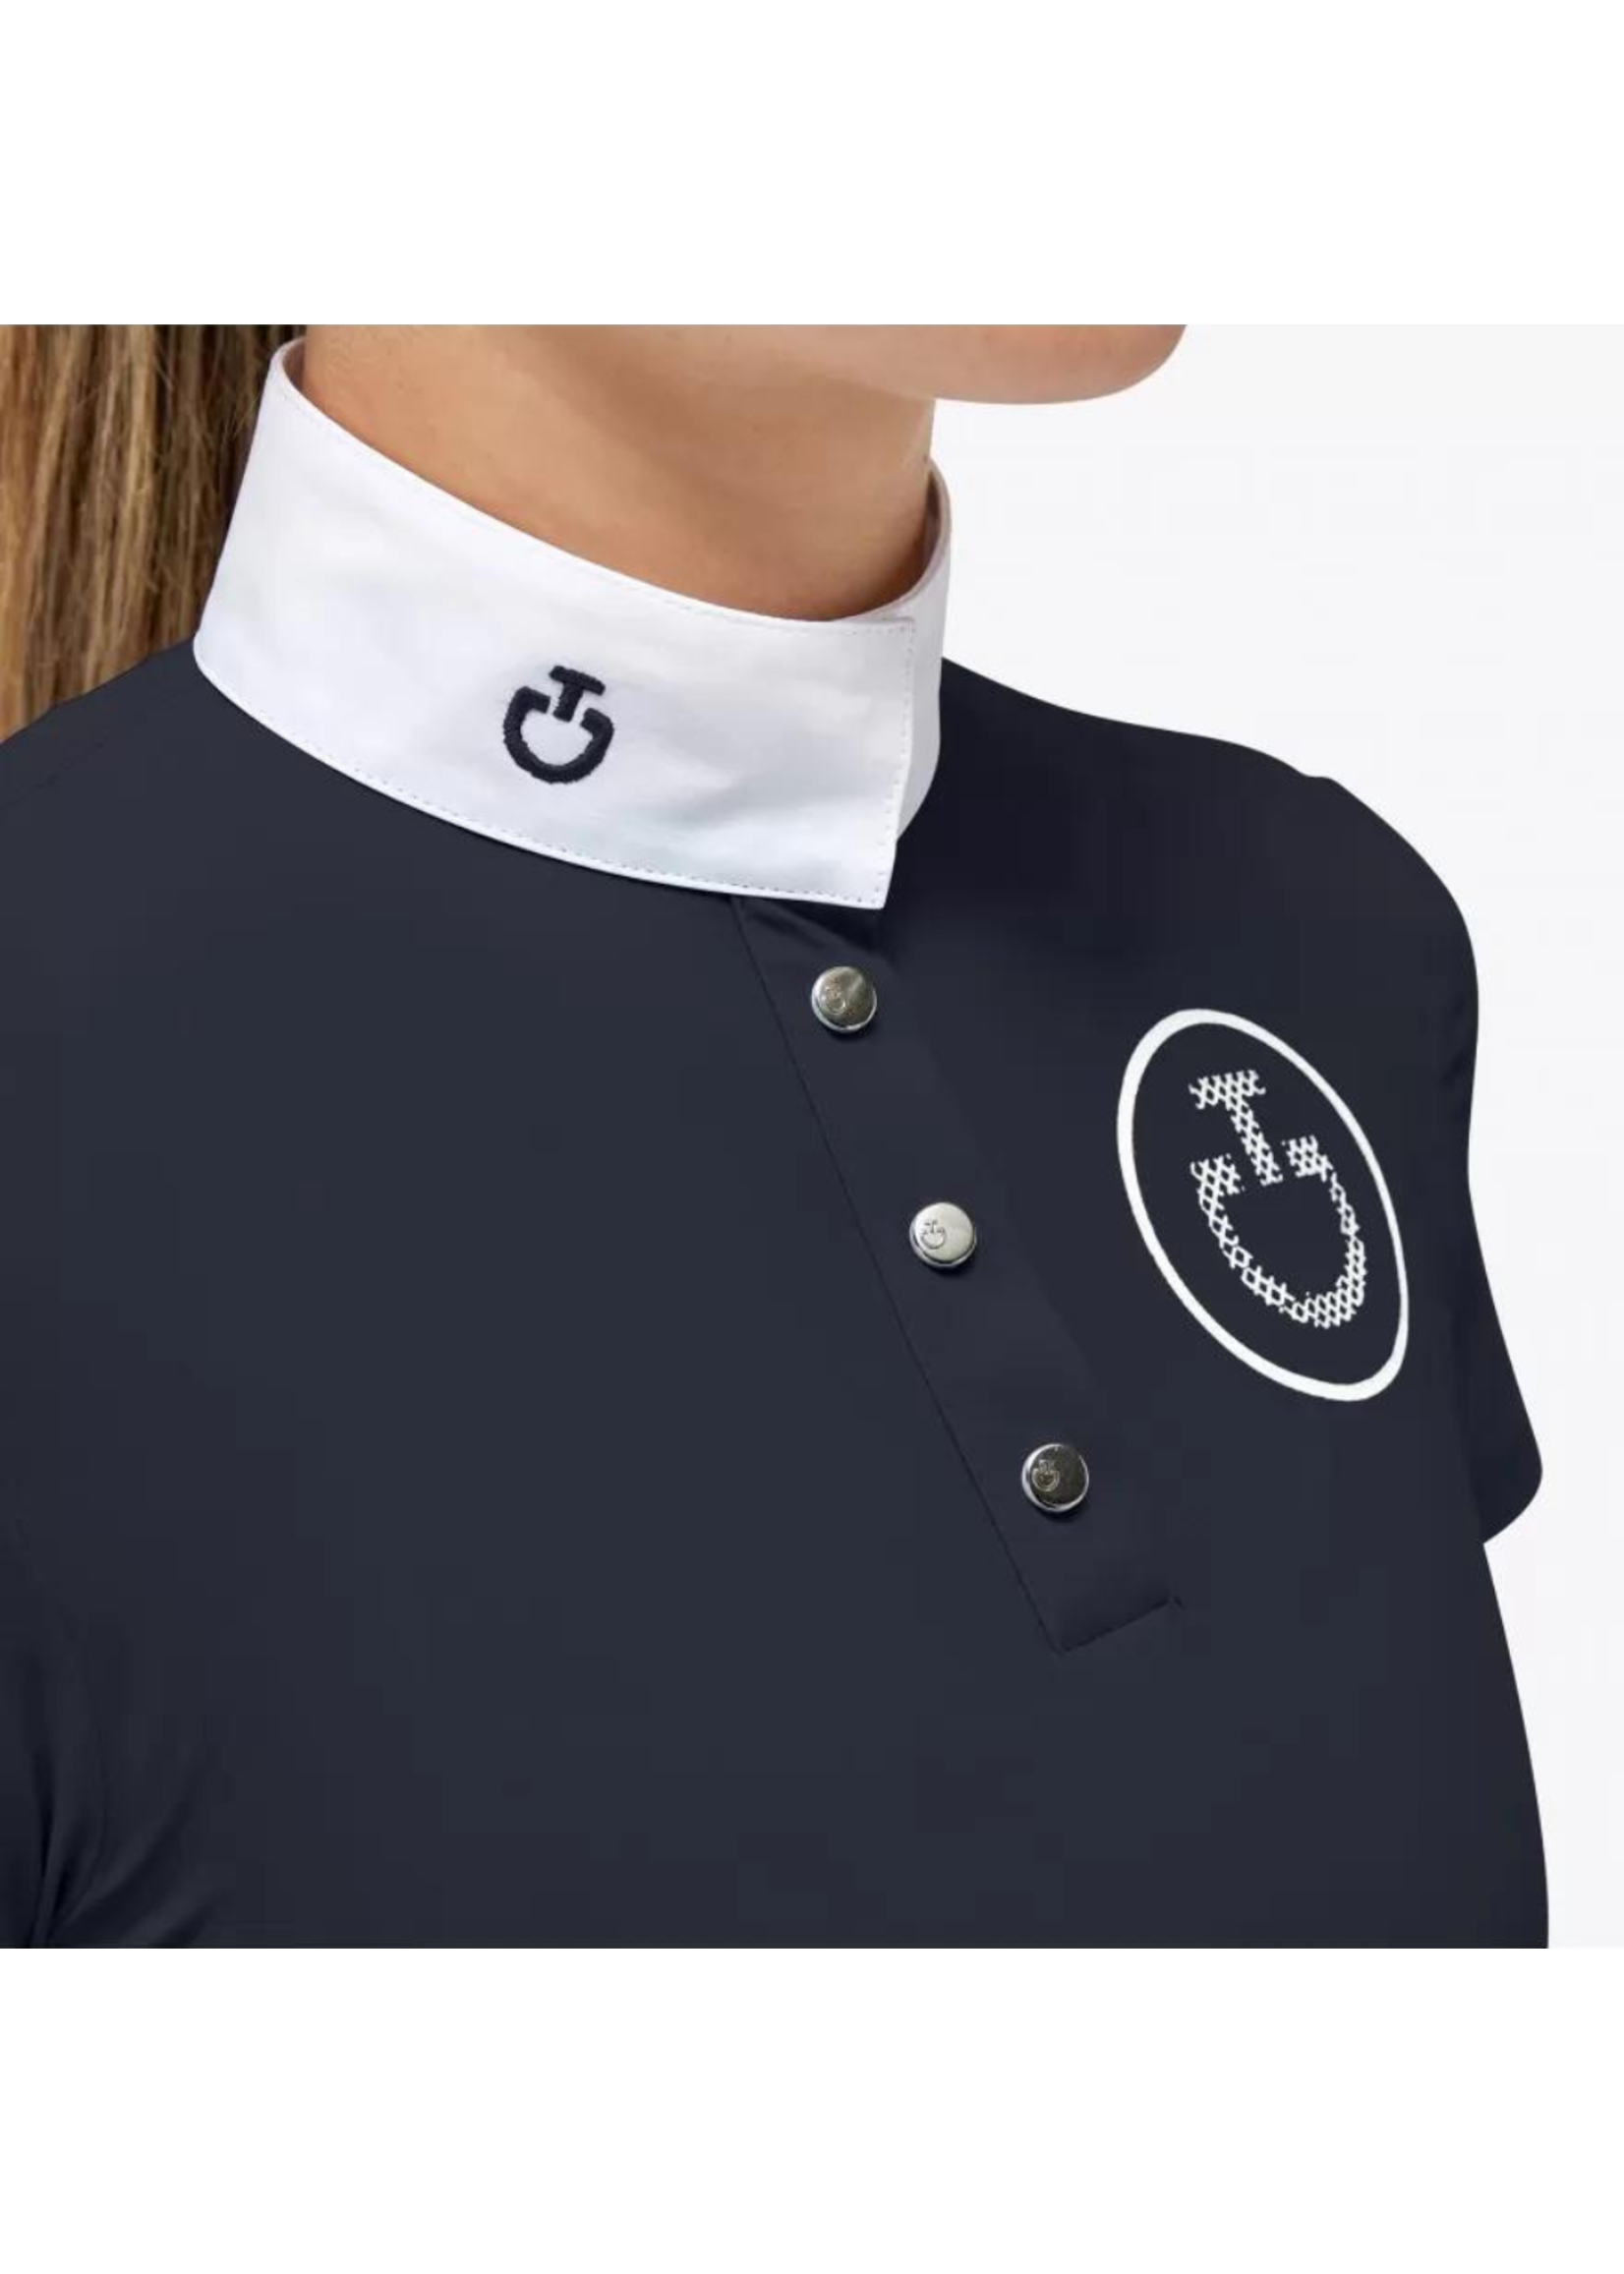 Cavalleria Toscana Cavalleria toscana cross stitch print jersey button up shirt